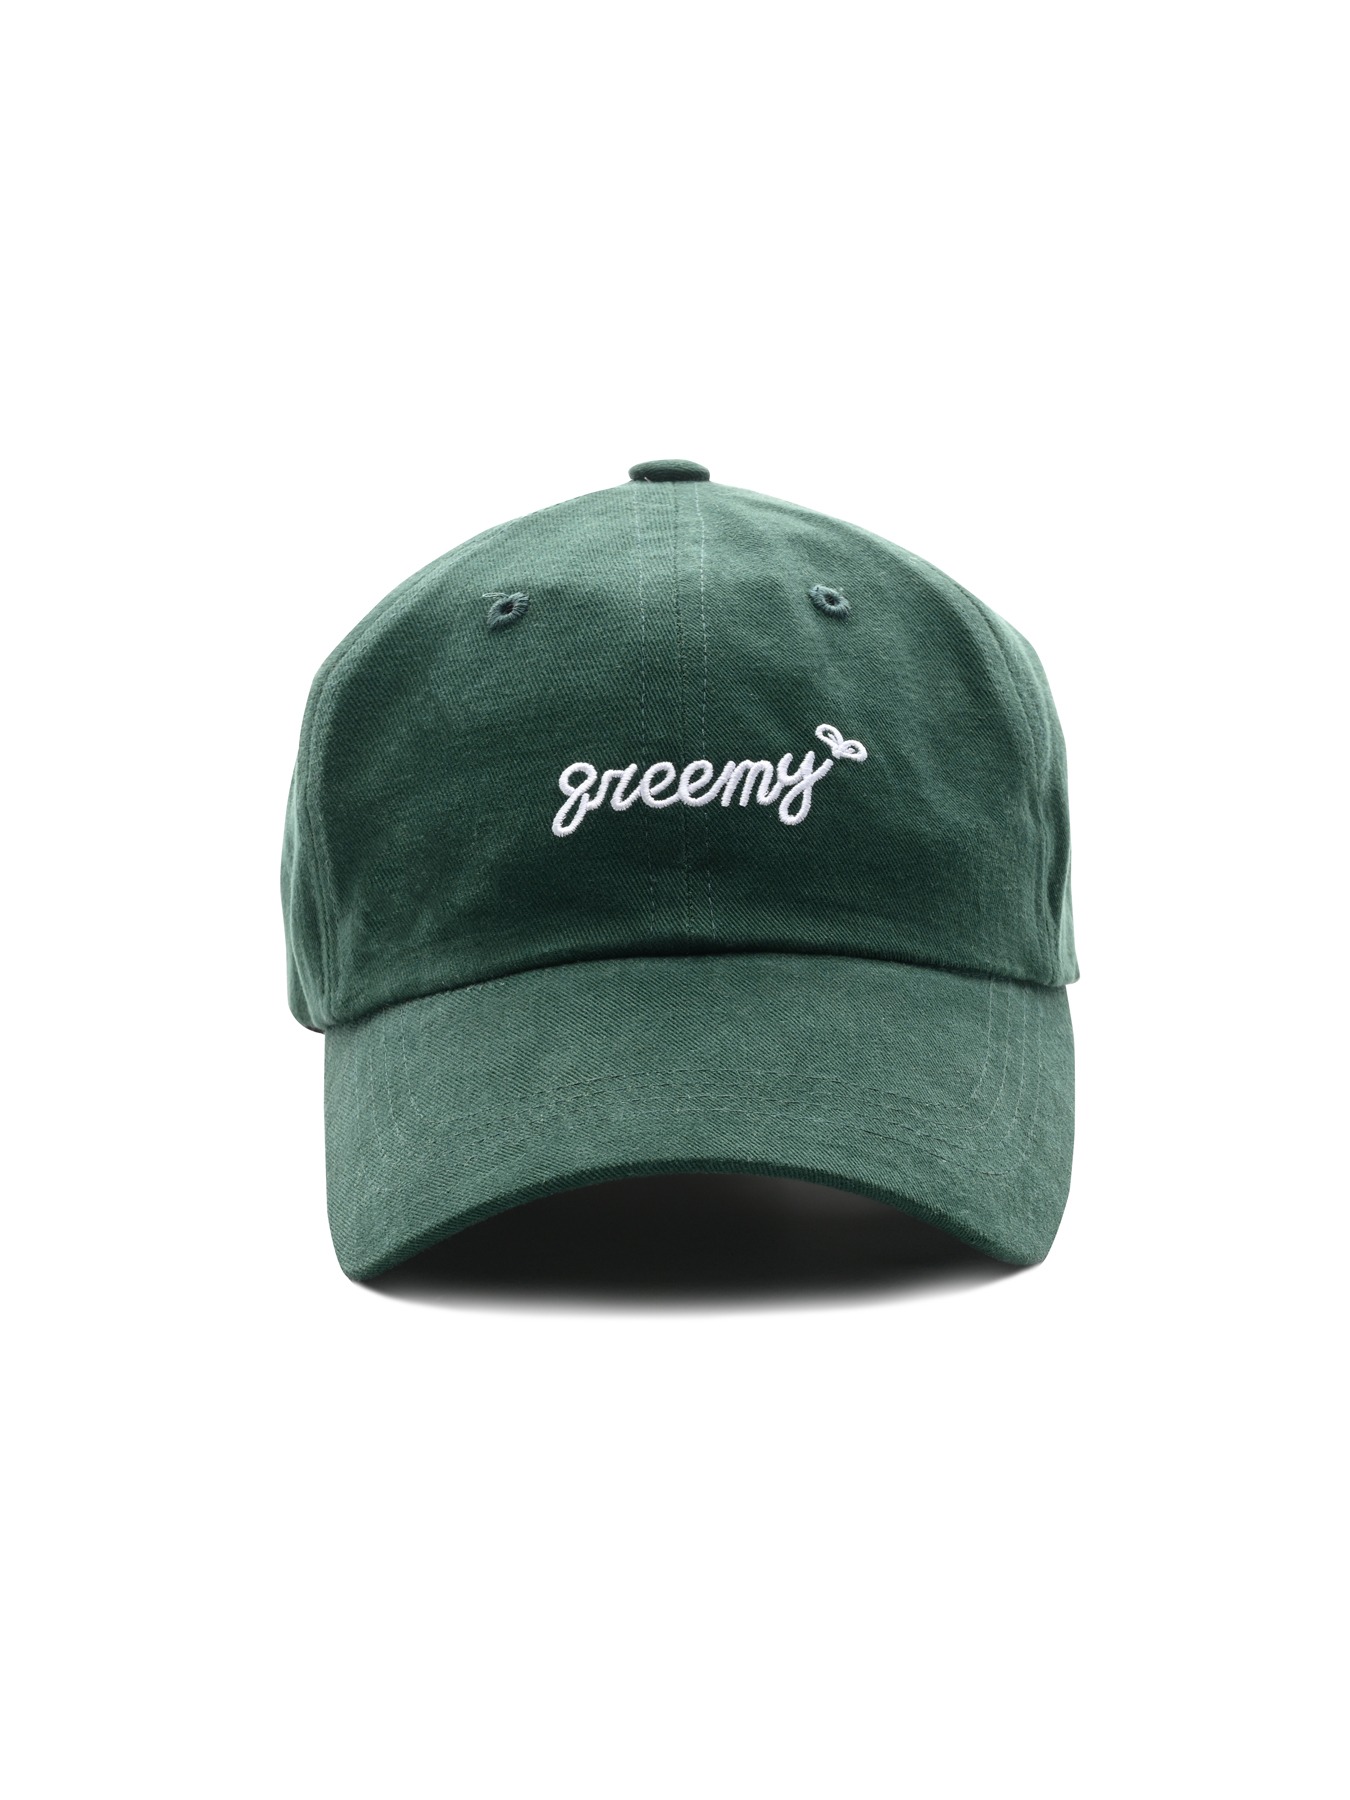 BASIC SMALL LOGO BALL CAP (Green)